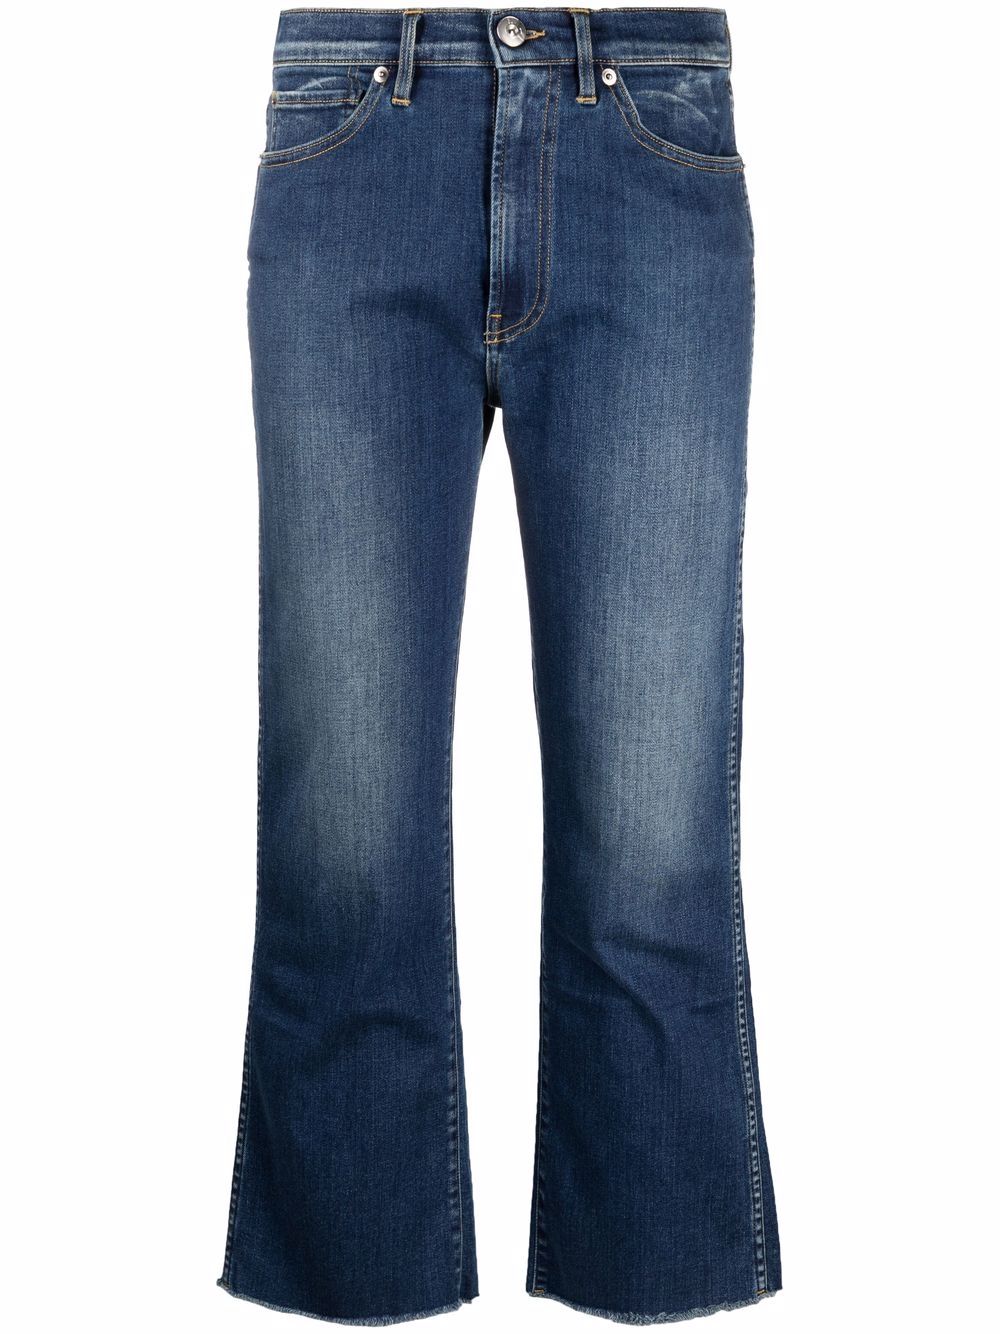 3x1 Cropped Jeans | Smart Closet